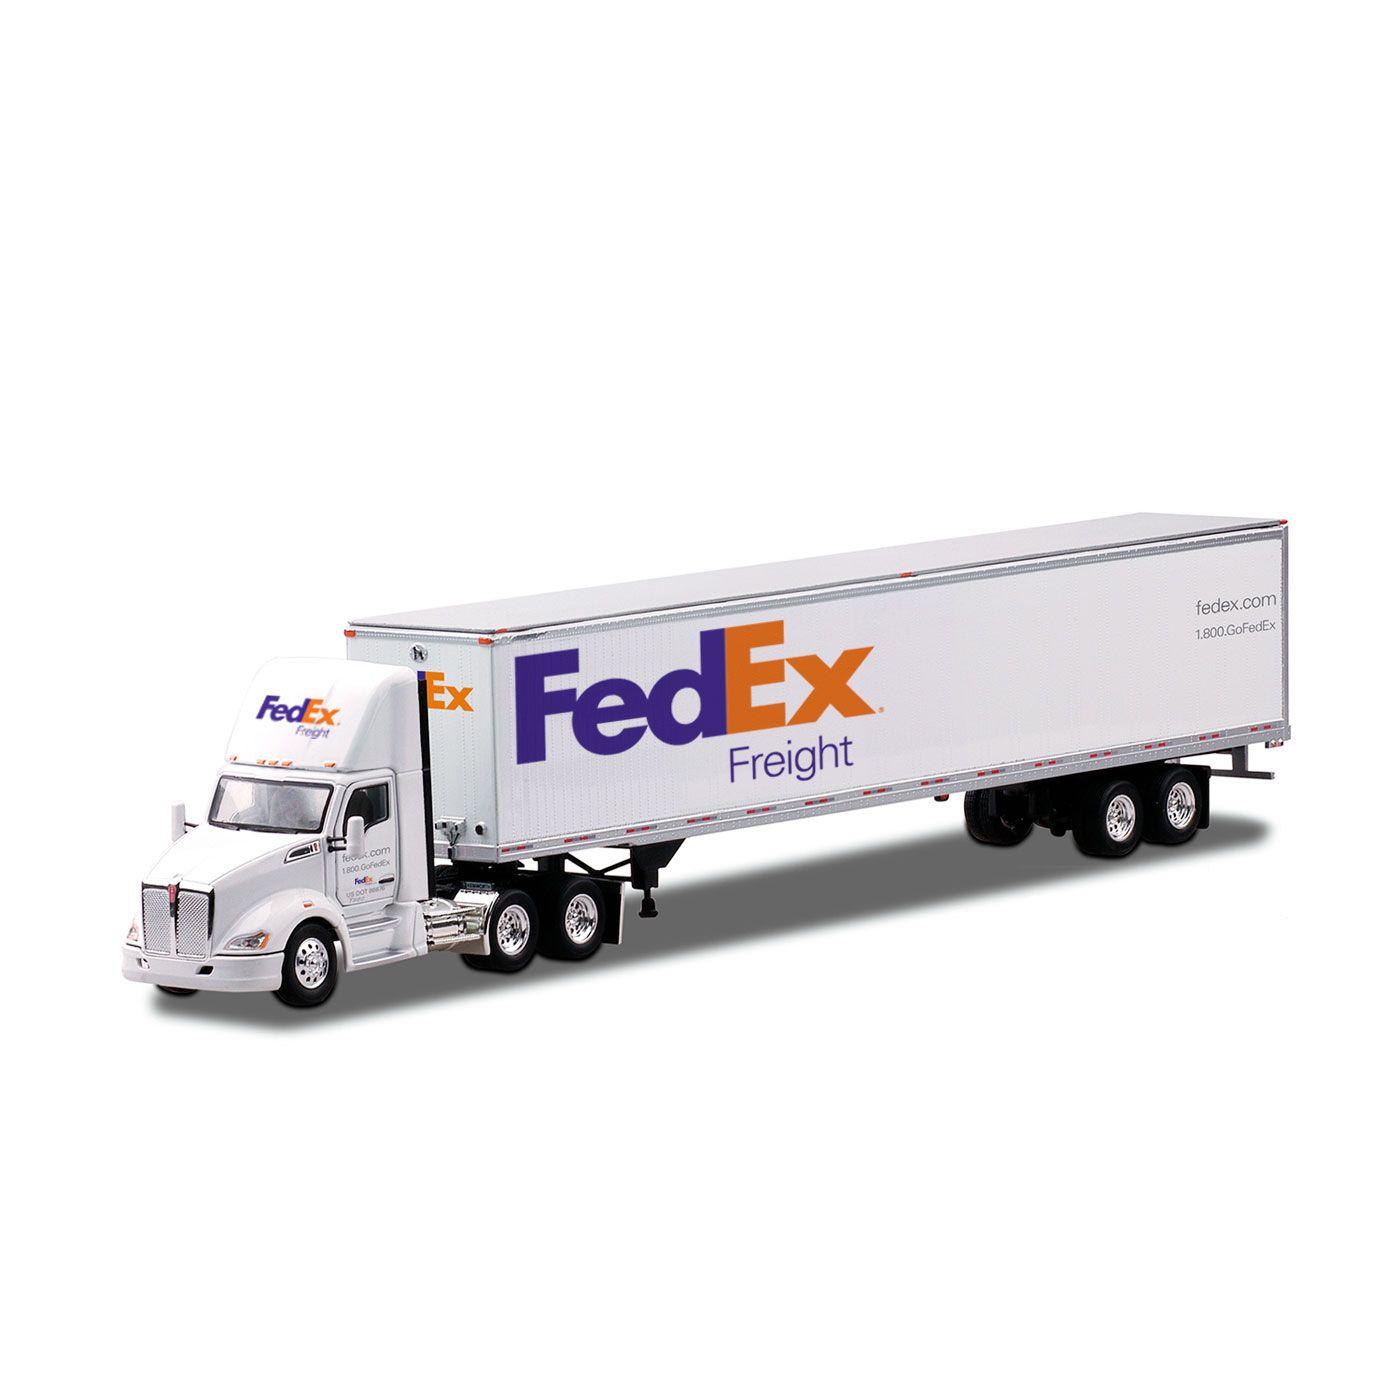 FedEx Freight Truck Logo - The FedEx Company Store